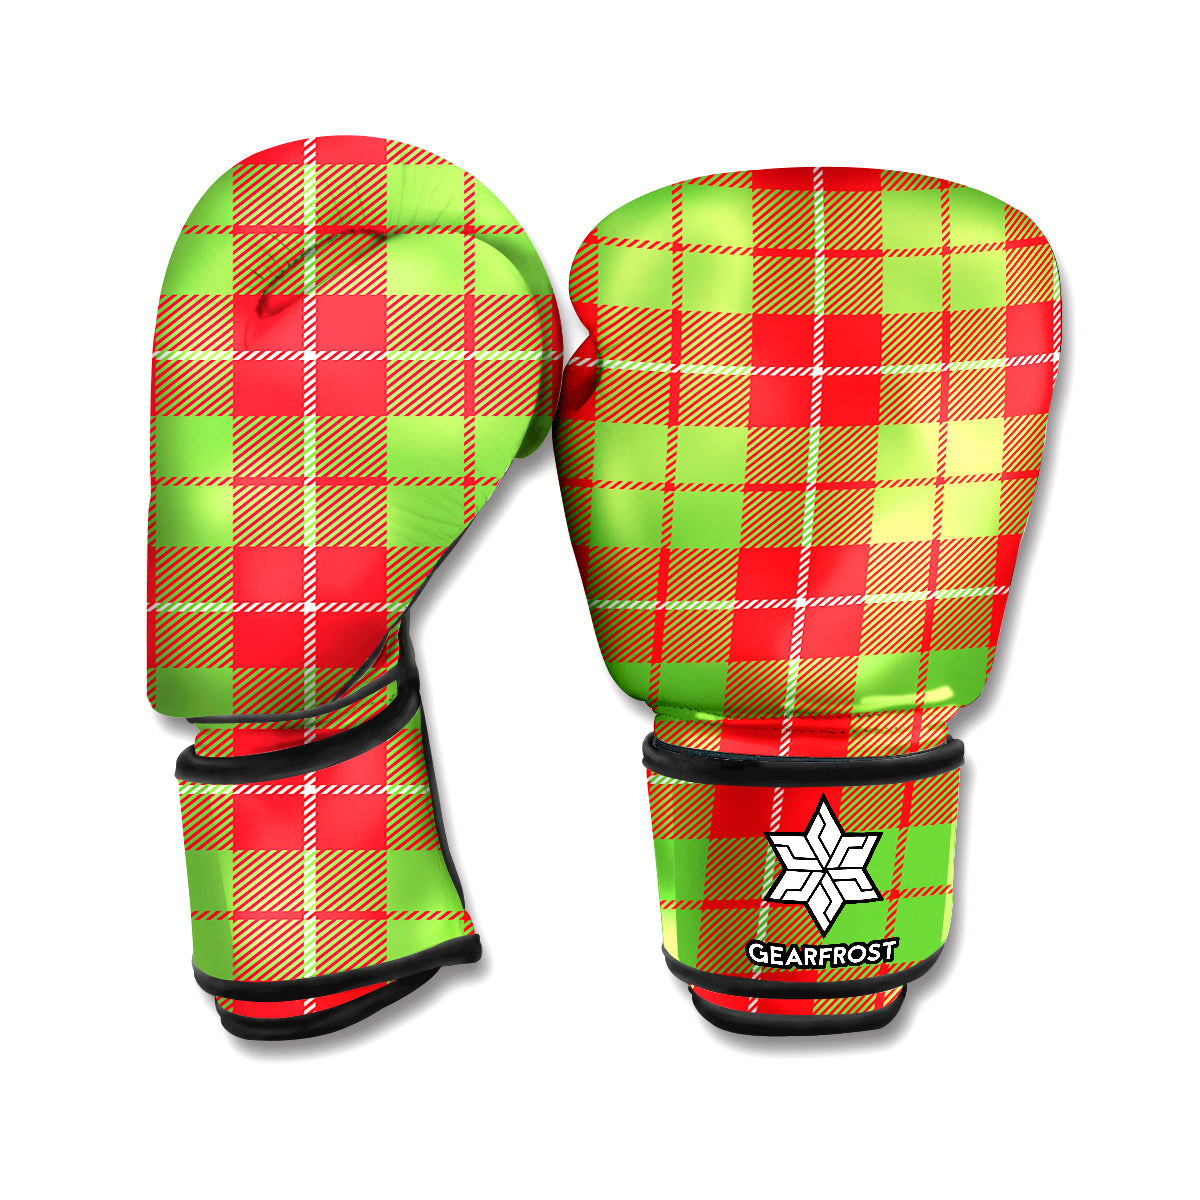 Xmas Plaid Pattern Print Boxing Gloves